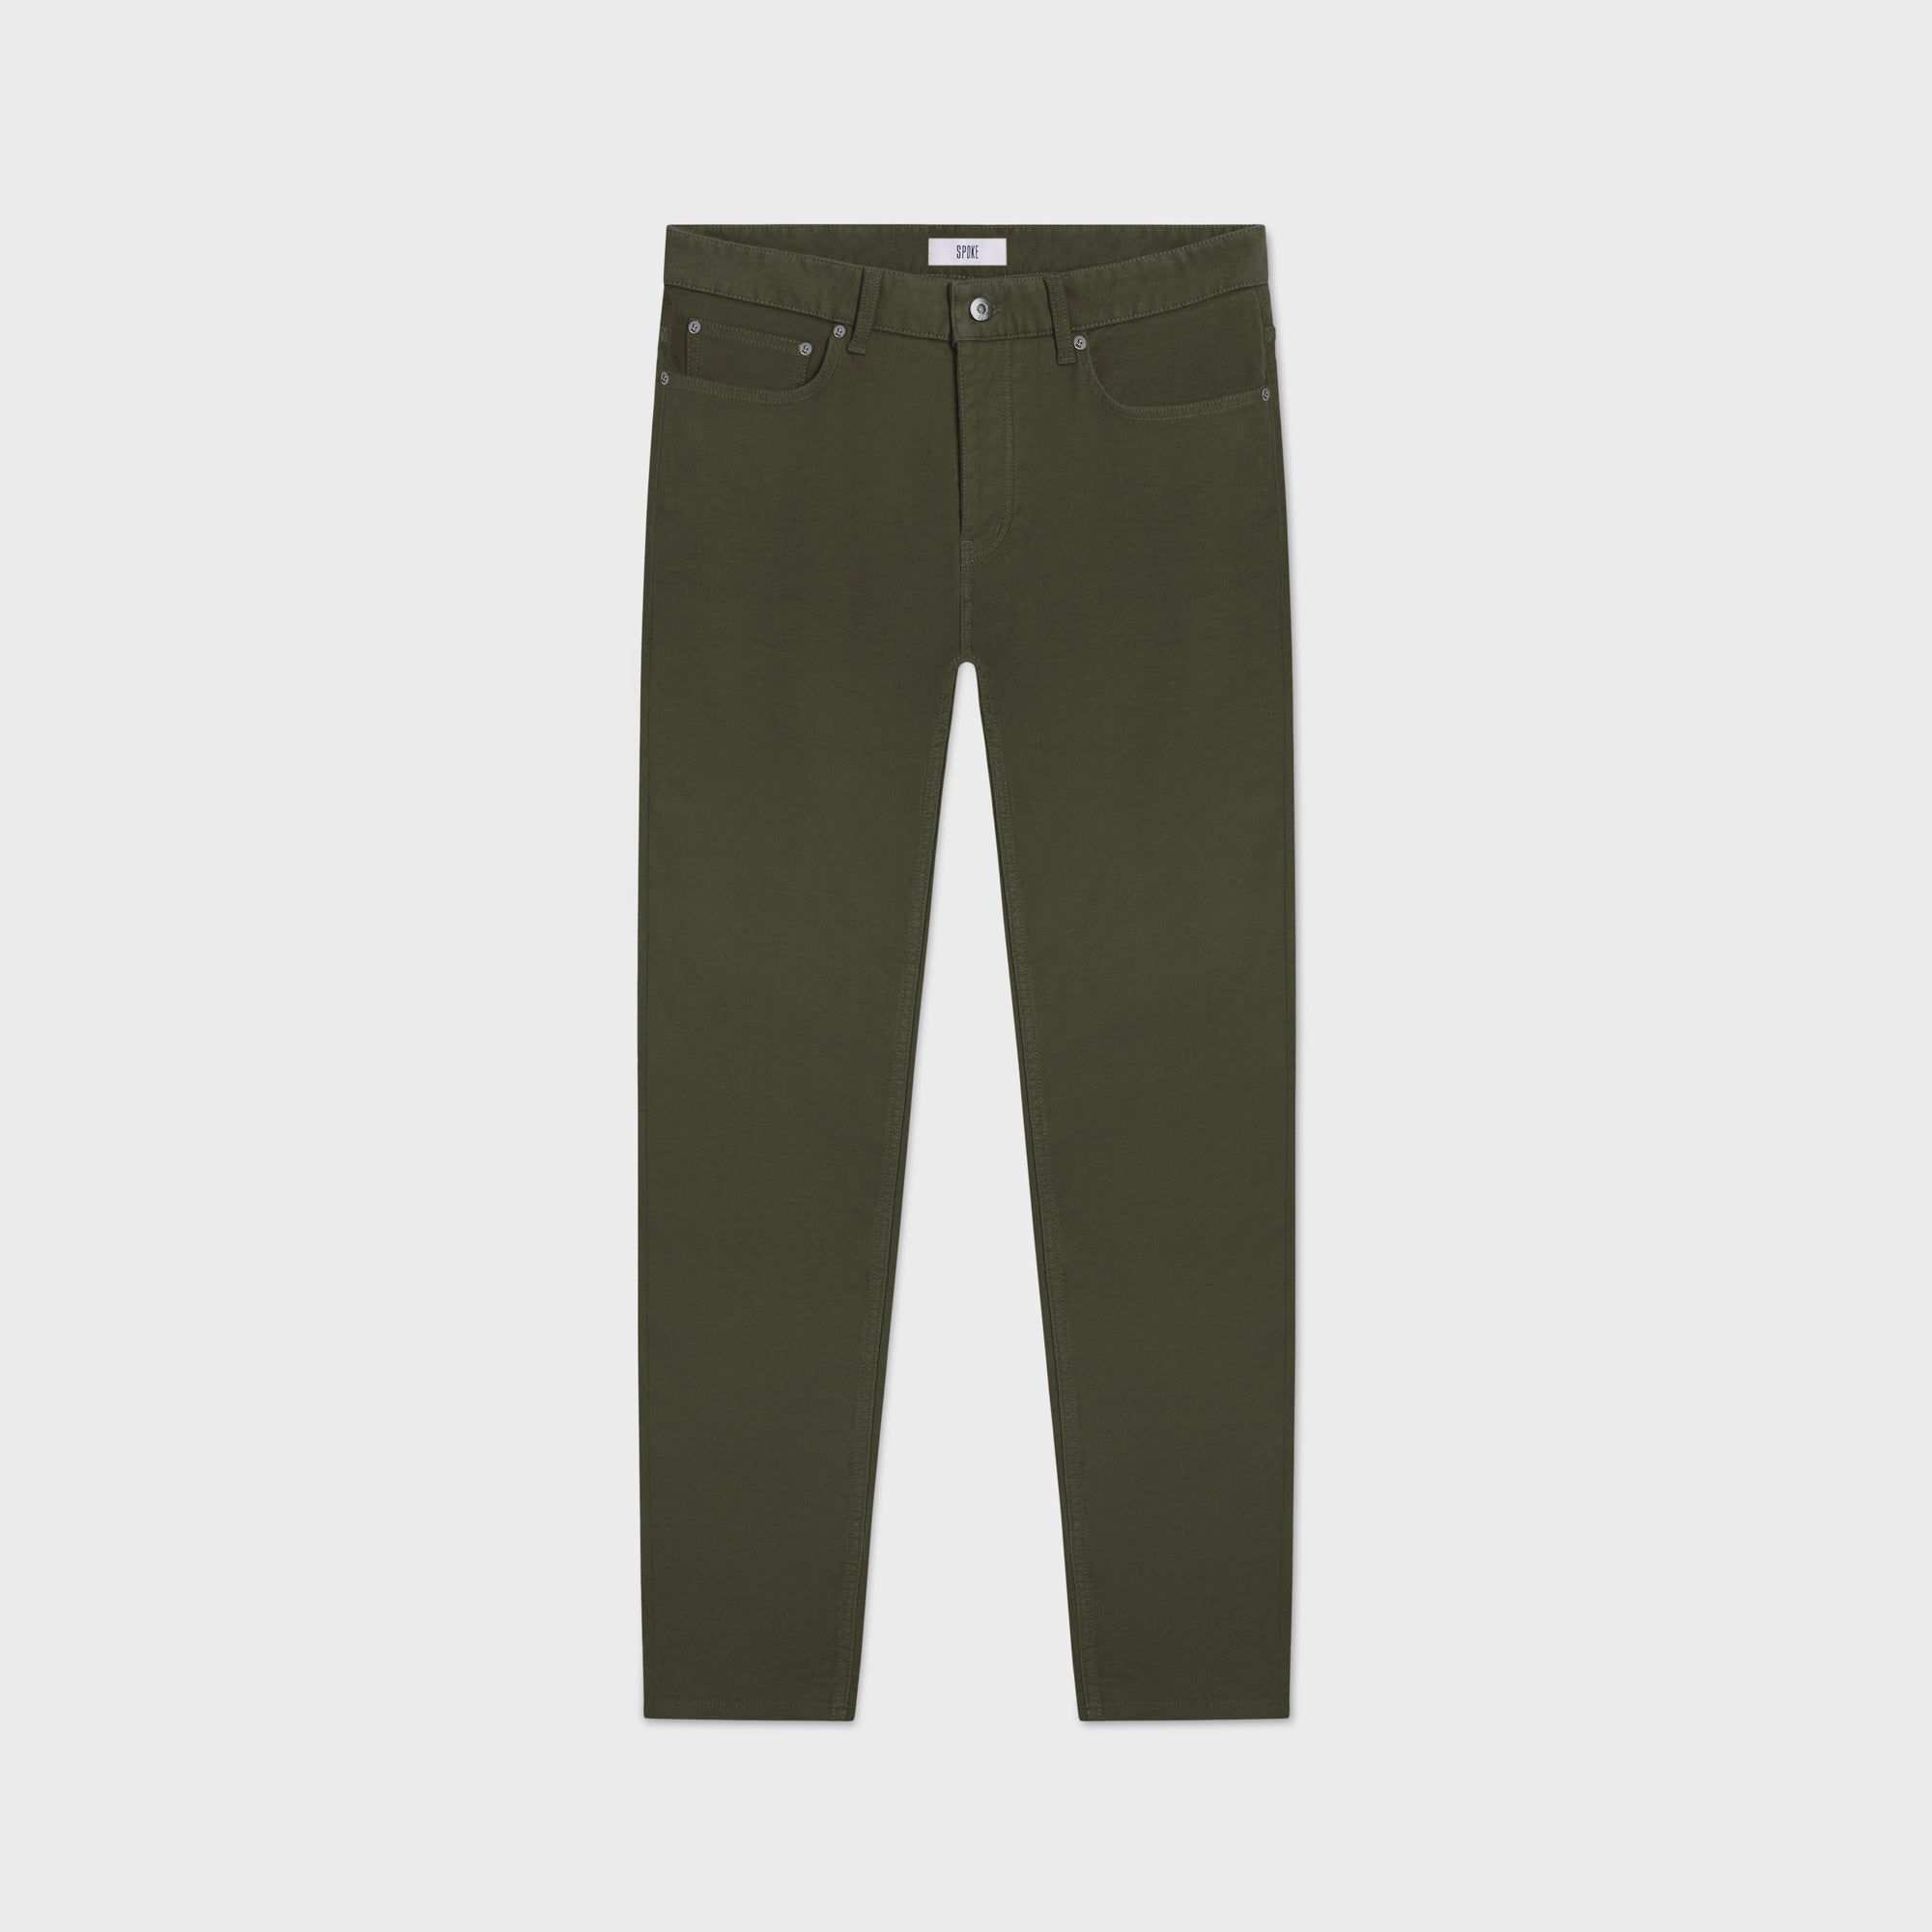 Nala Olive Green Stacked Flare Jeans - 95denim